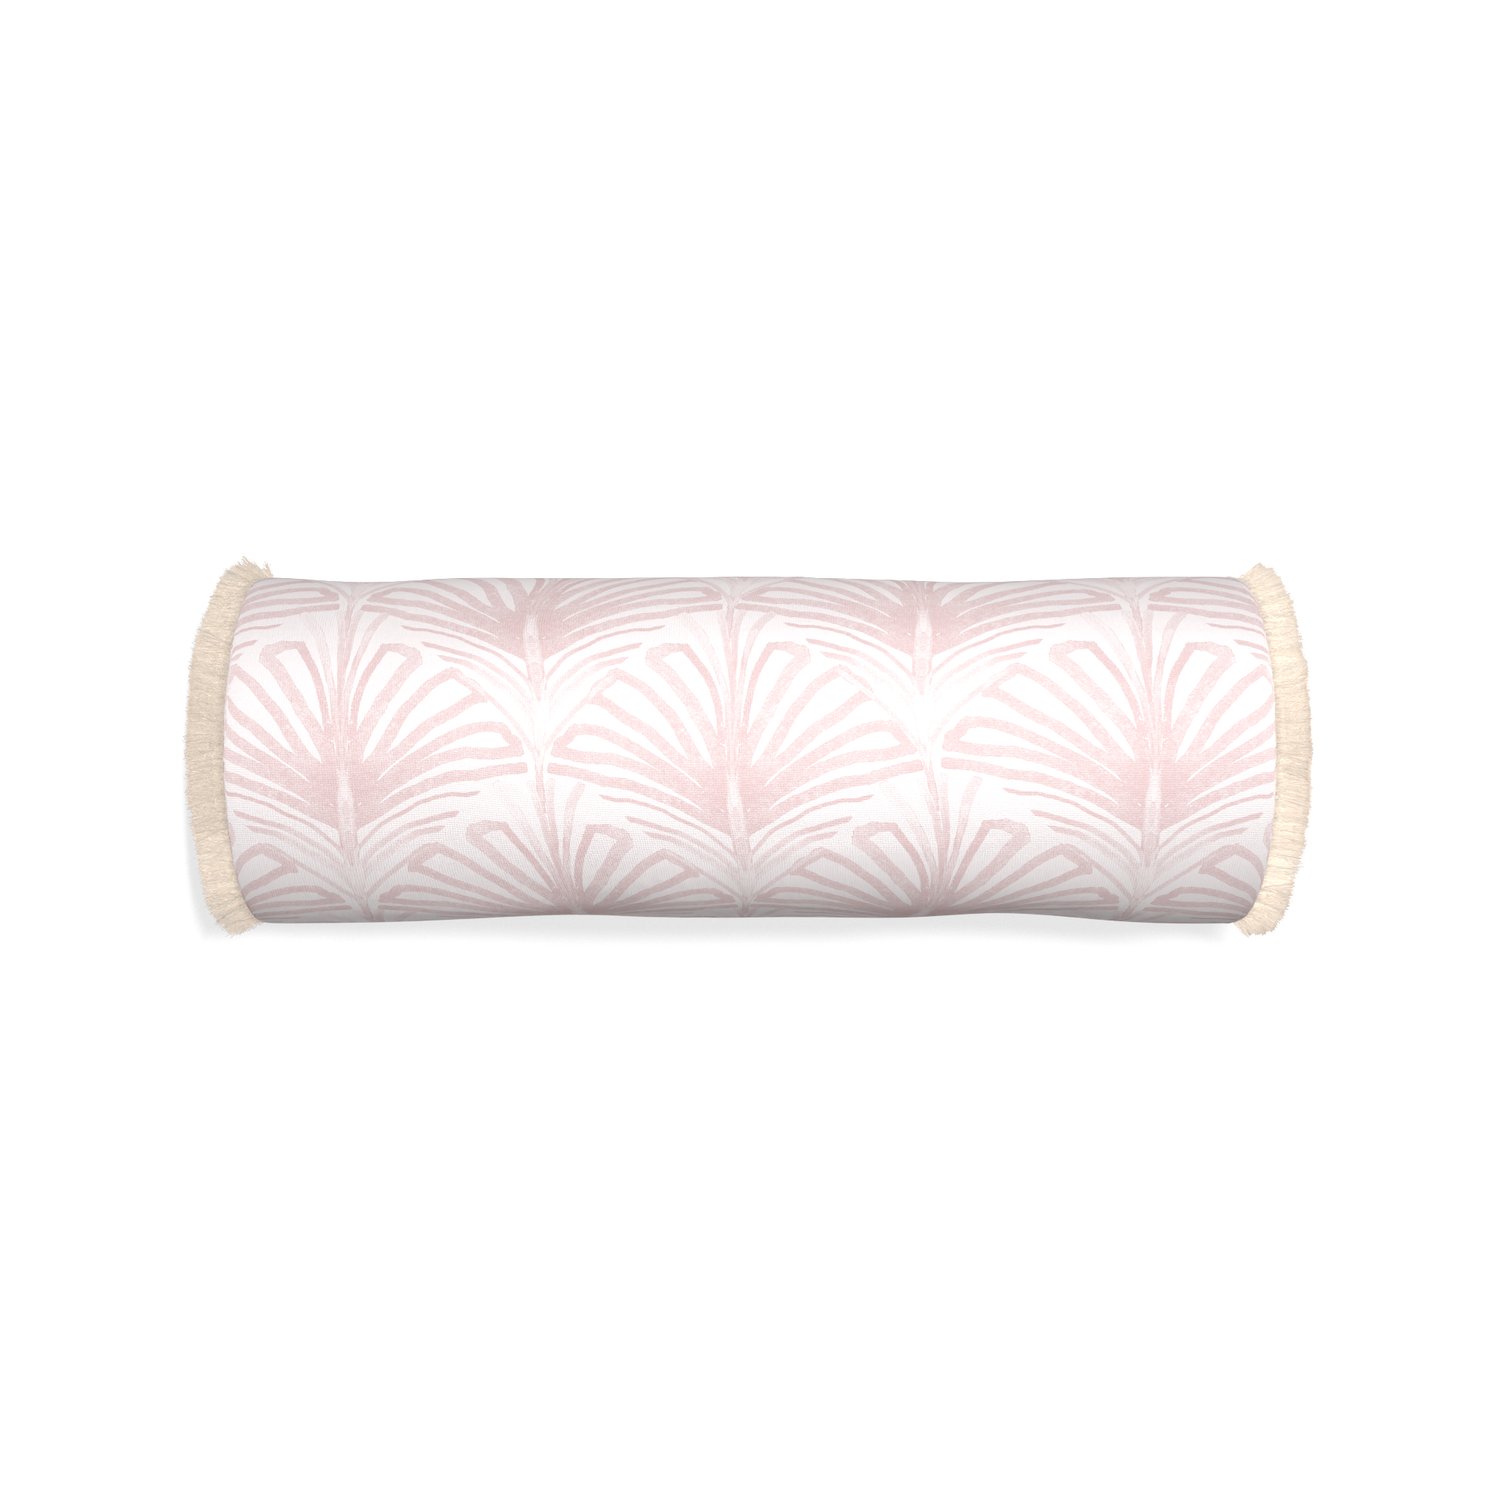 Bolster suzy rose custom pillow with cream fringe on white background